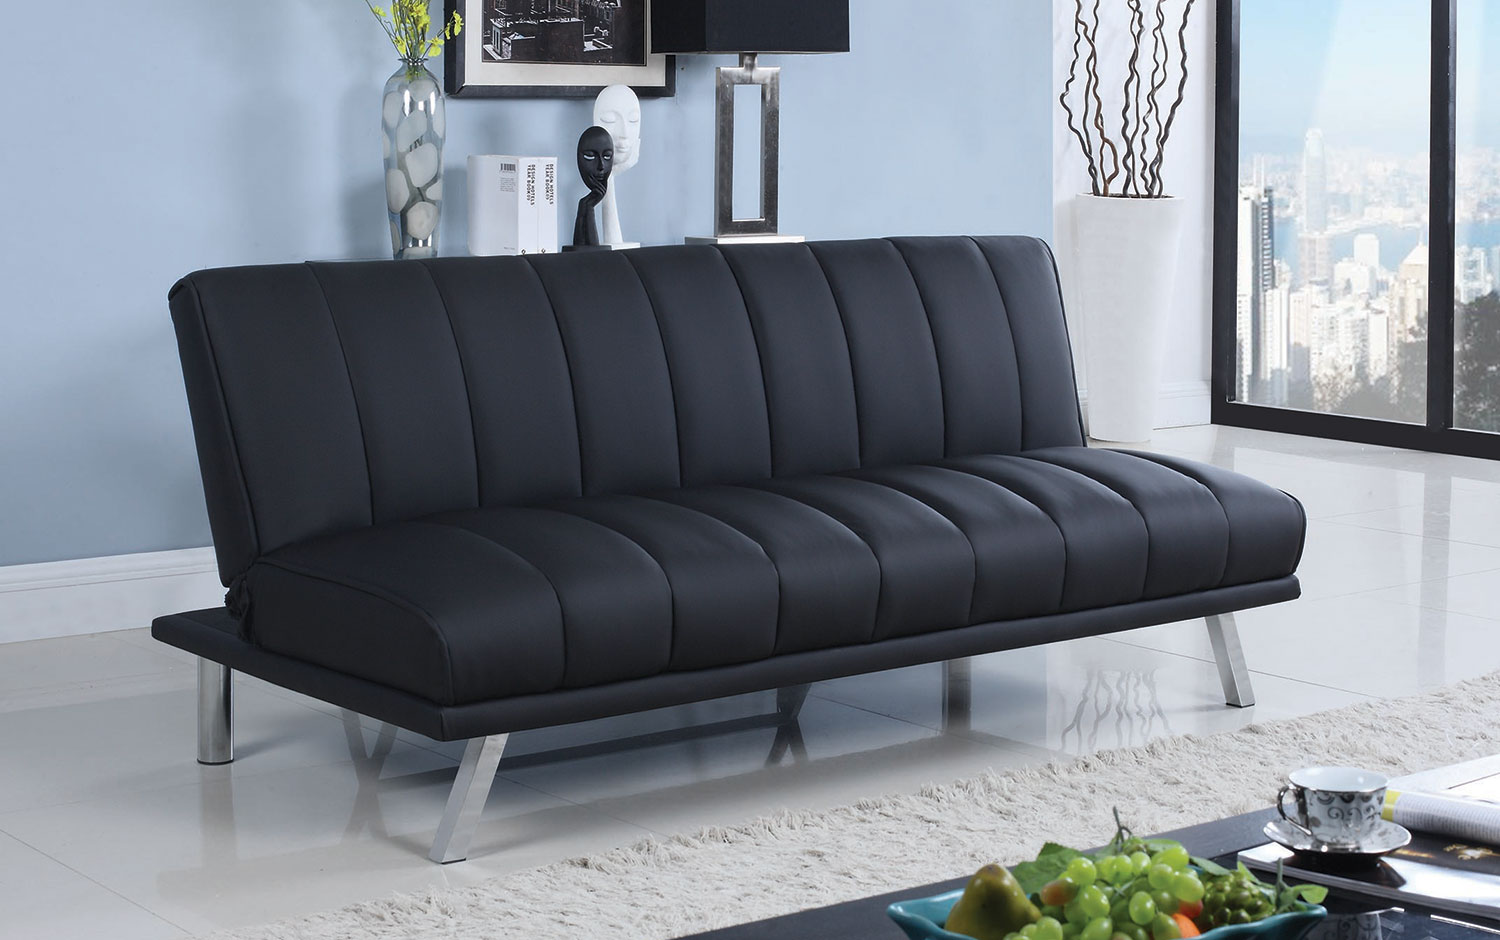 Coaster 300701 Sofa Bed - Black